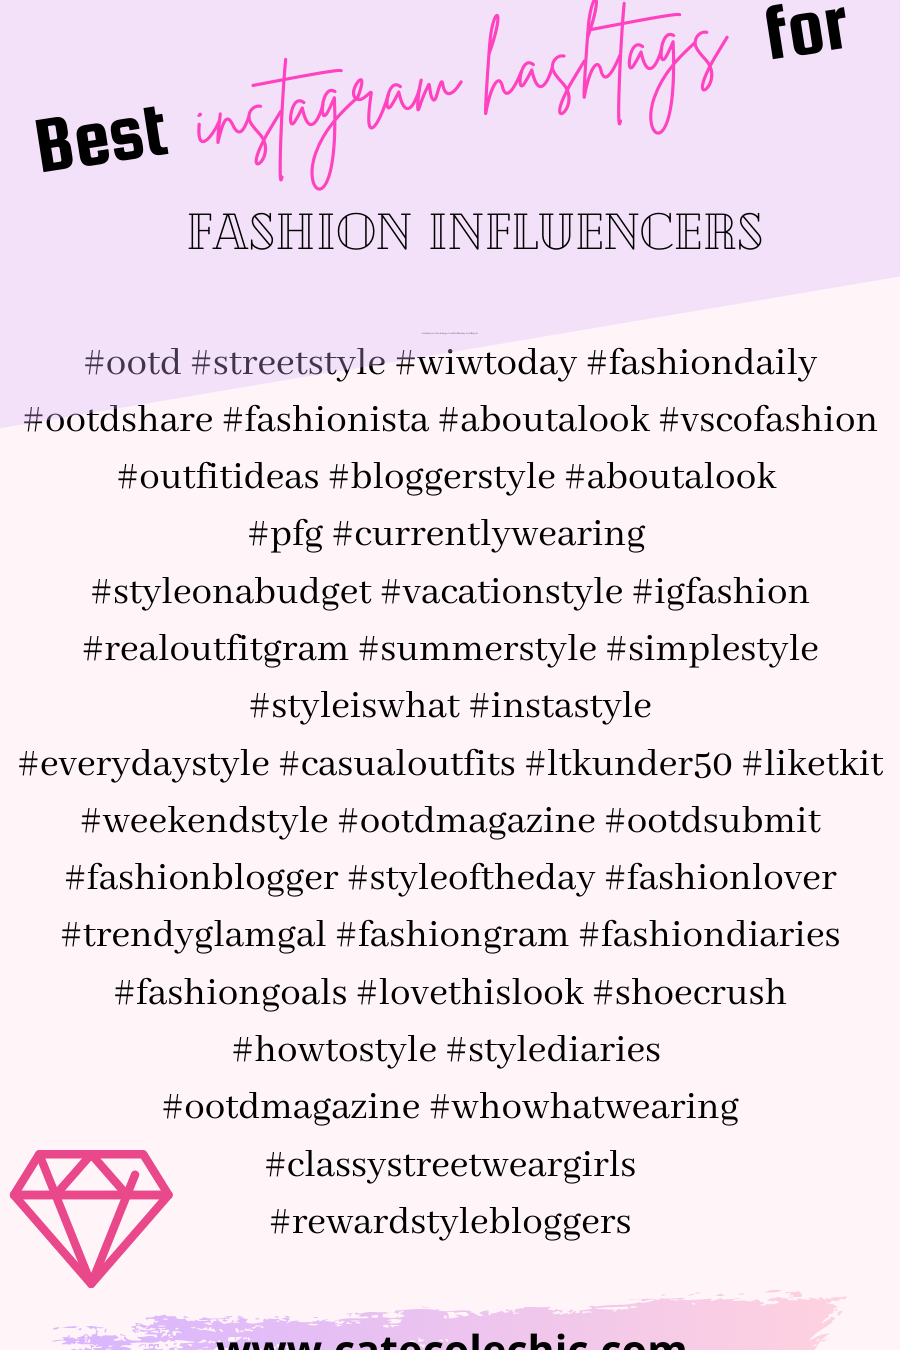 Los mejores hashtags de Instagram para influencers de moda |